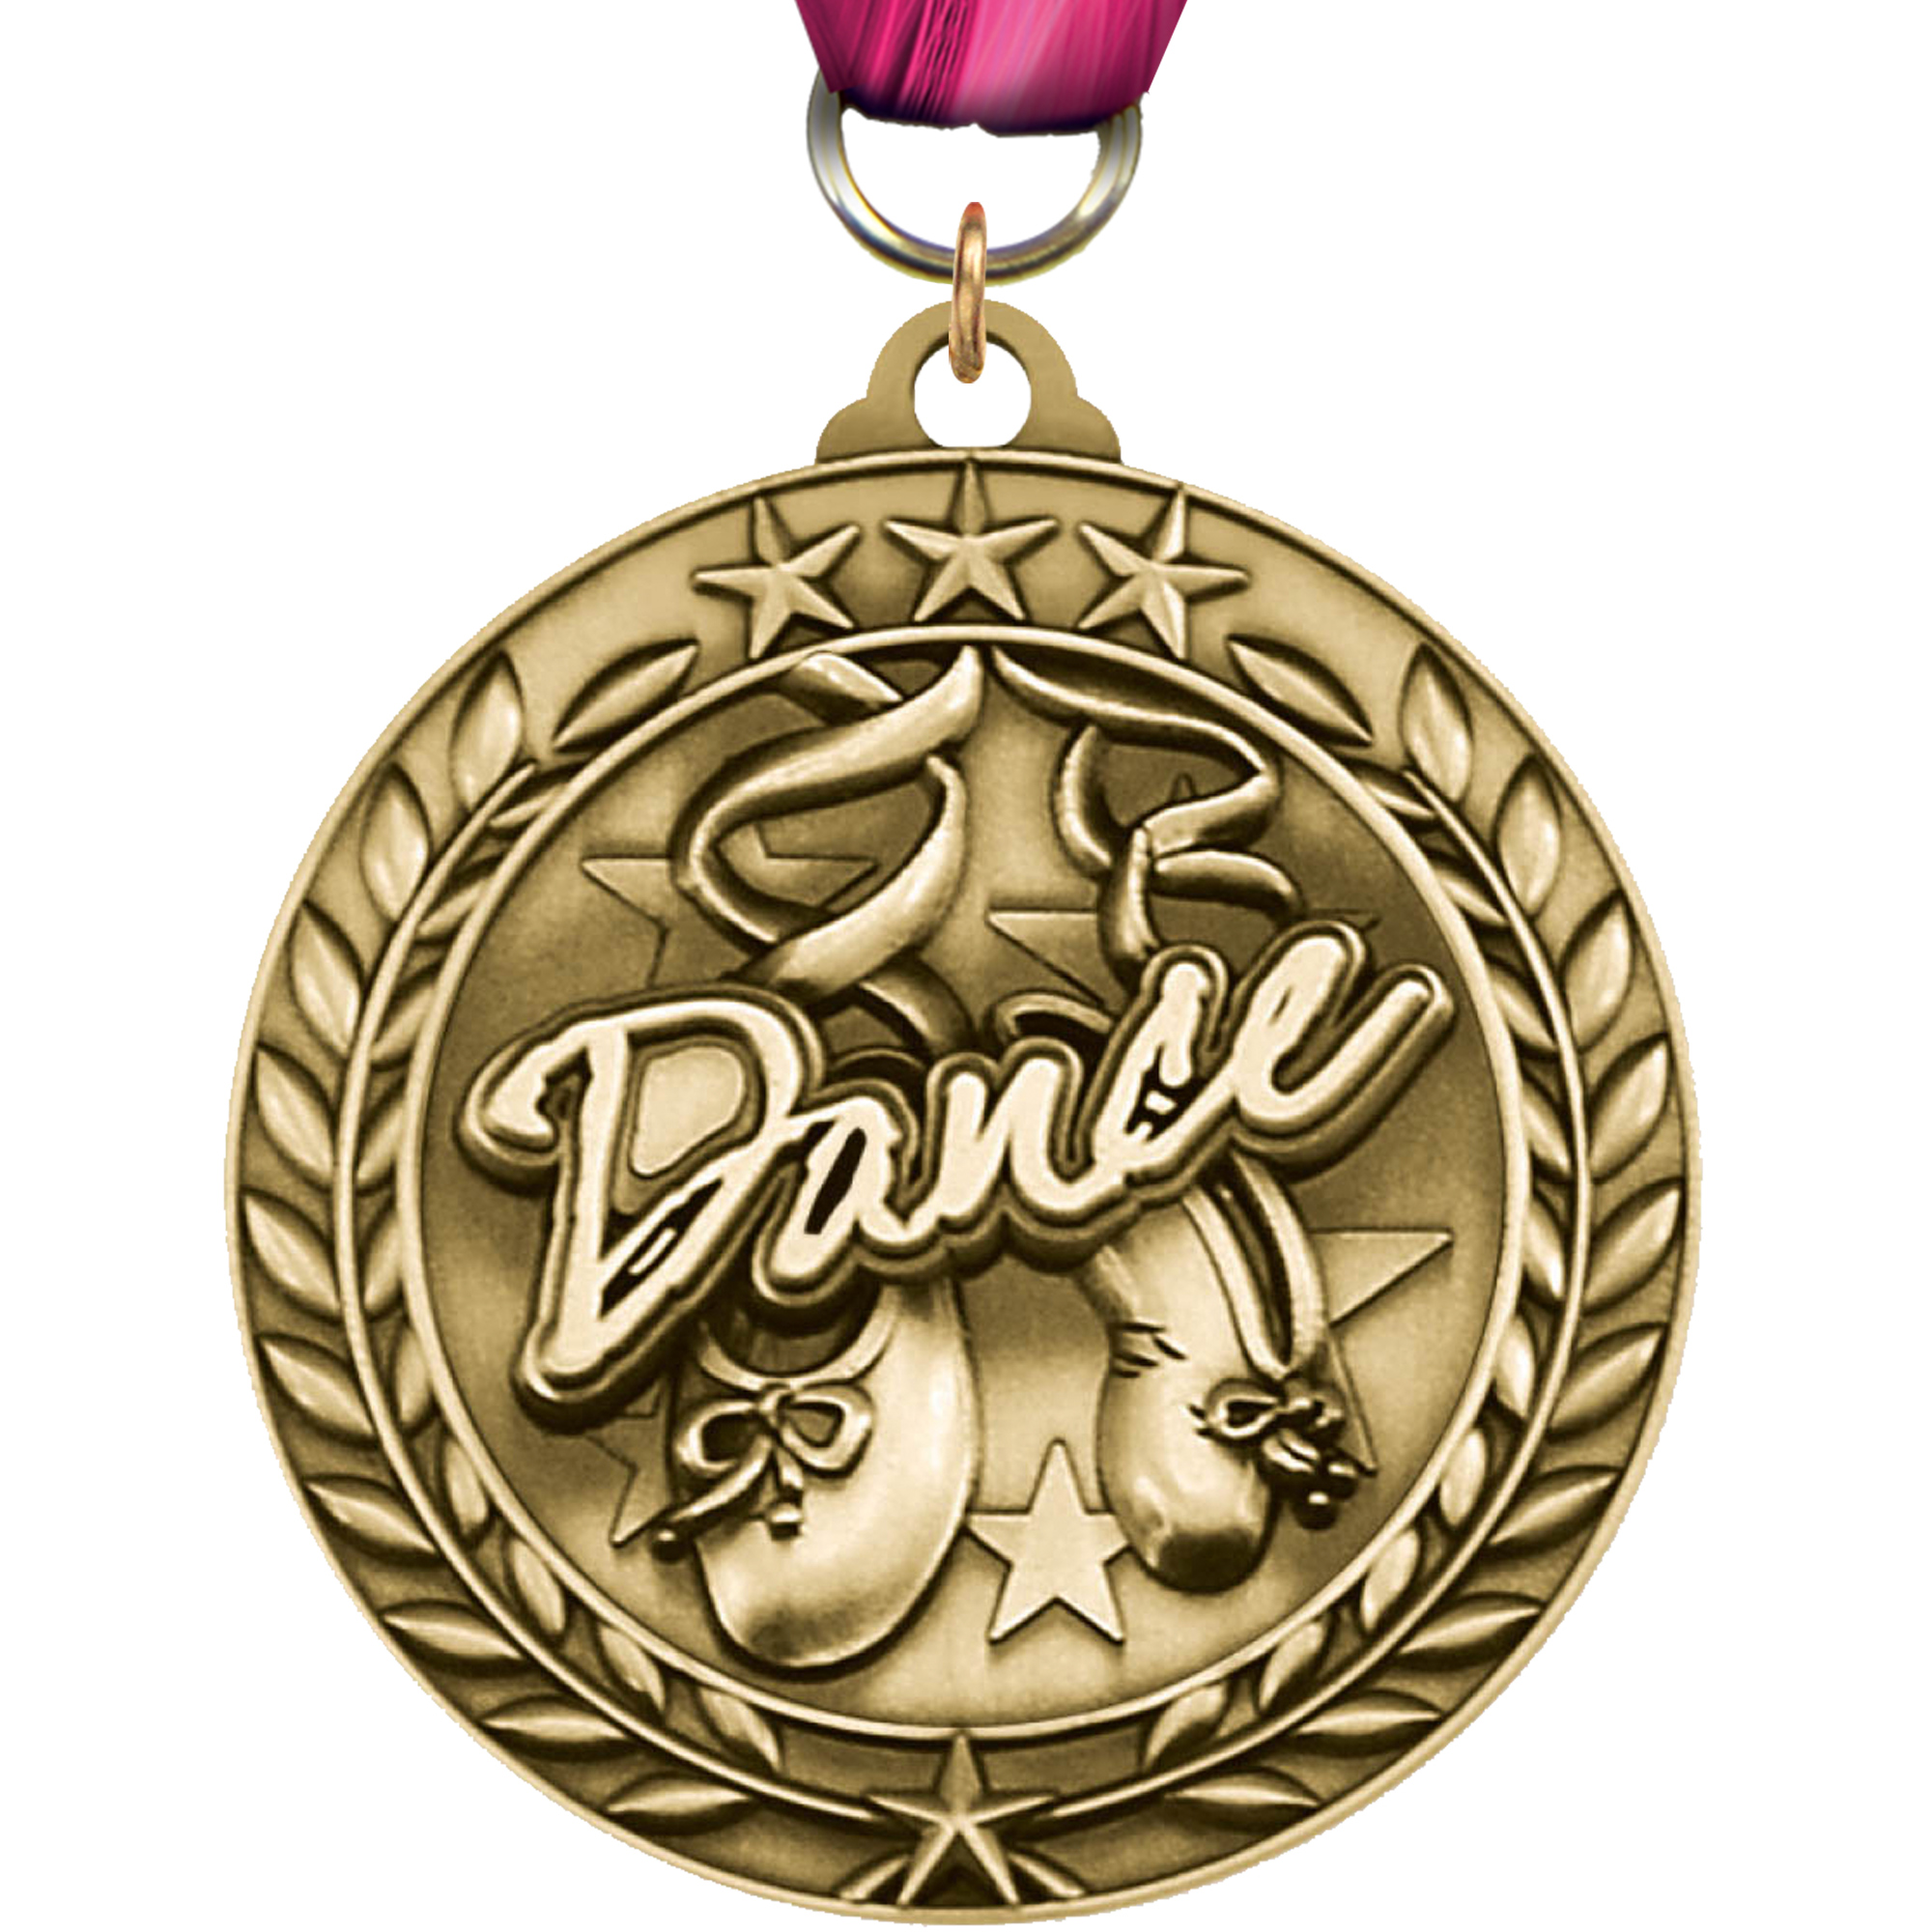 Dance 1.75 inch Dimensional Medal